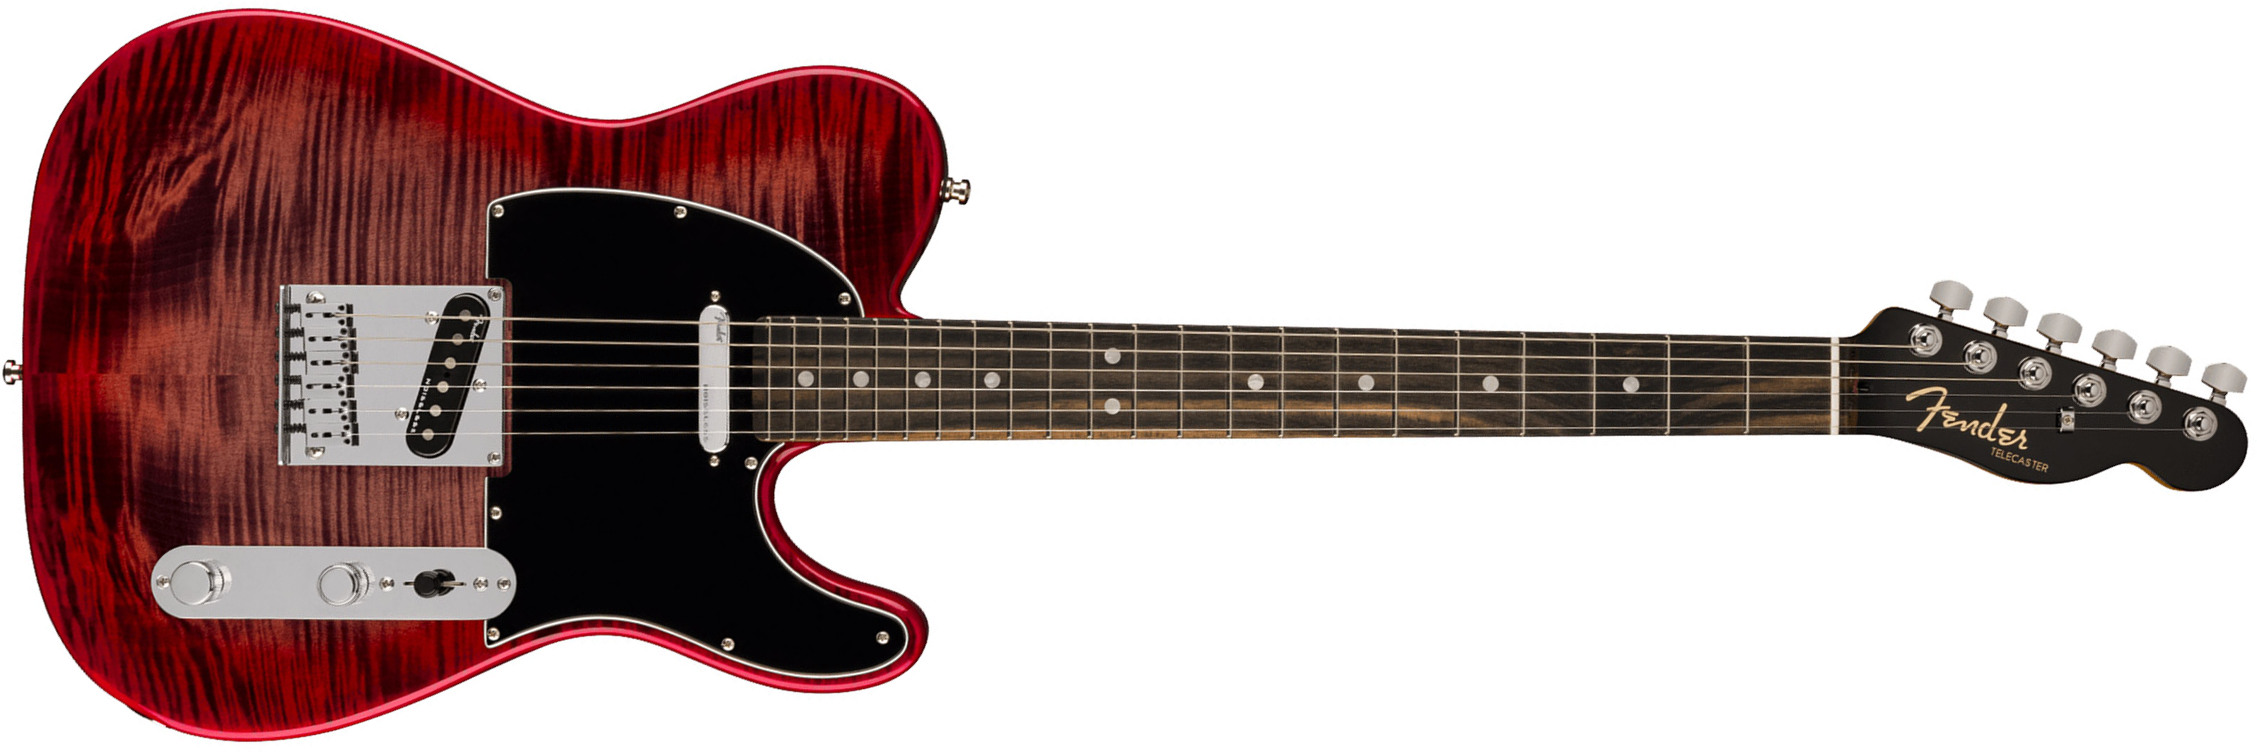 Fender Tele American Ultra Ltd Usa 2s Ht Eb - Umbra - Guitarra eléctrica con forma de tel - Main picture